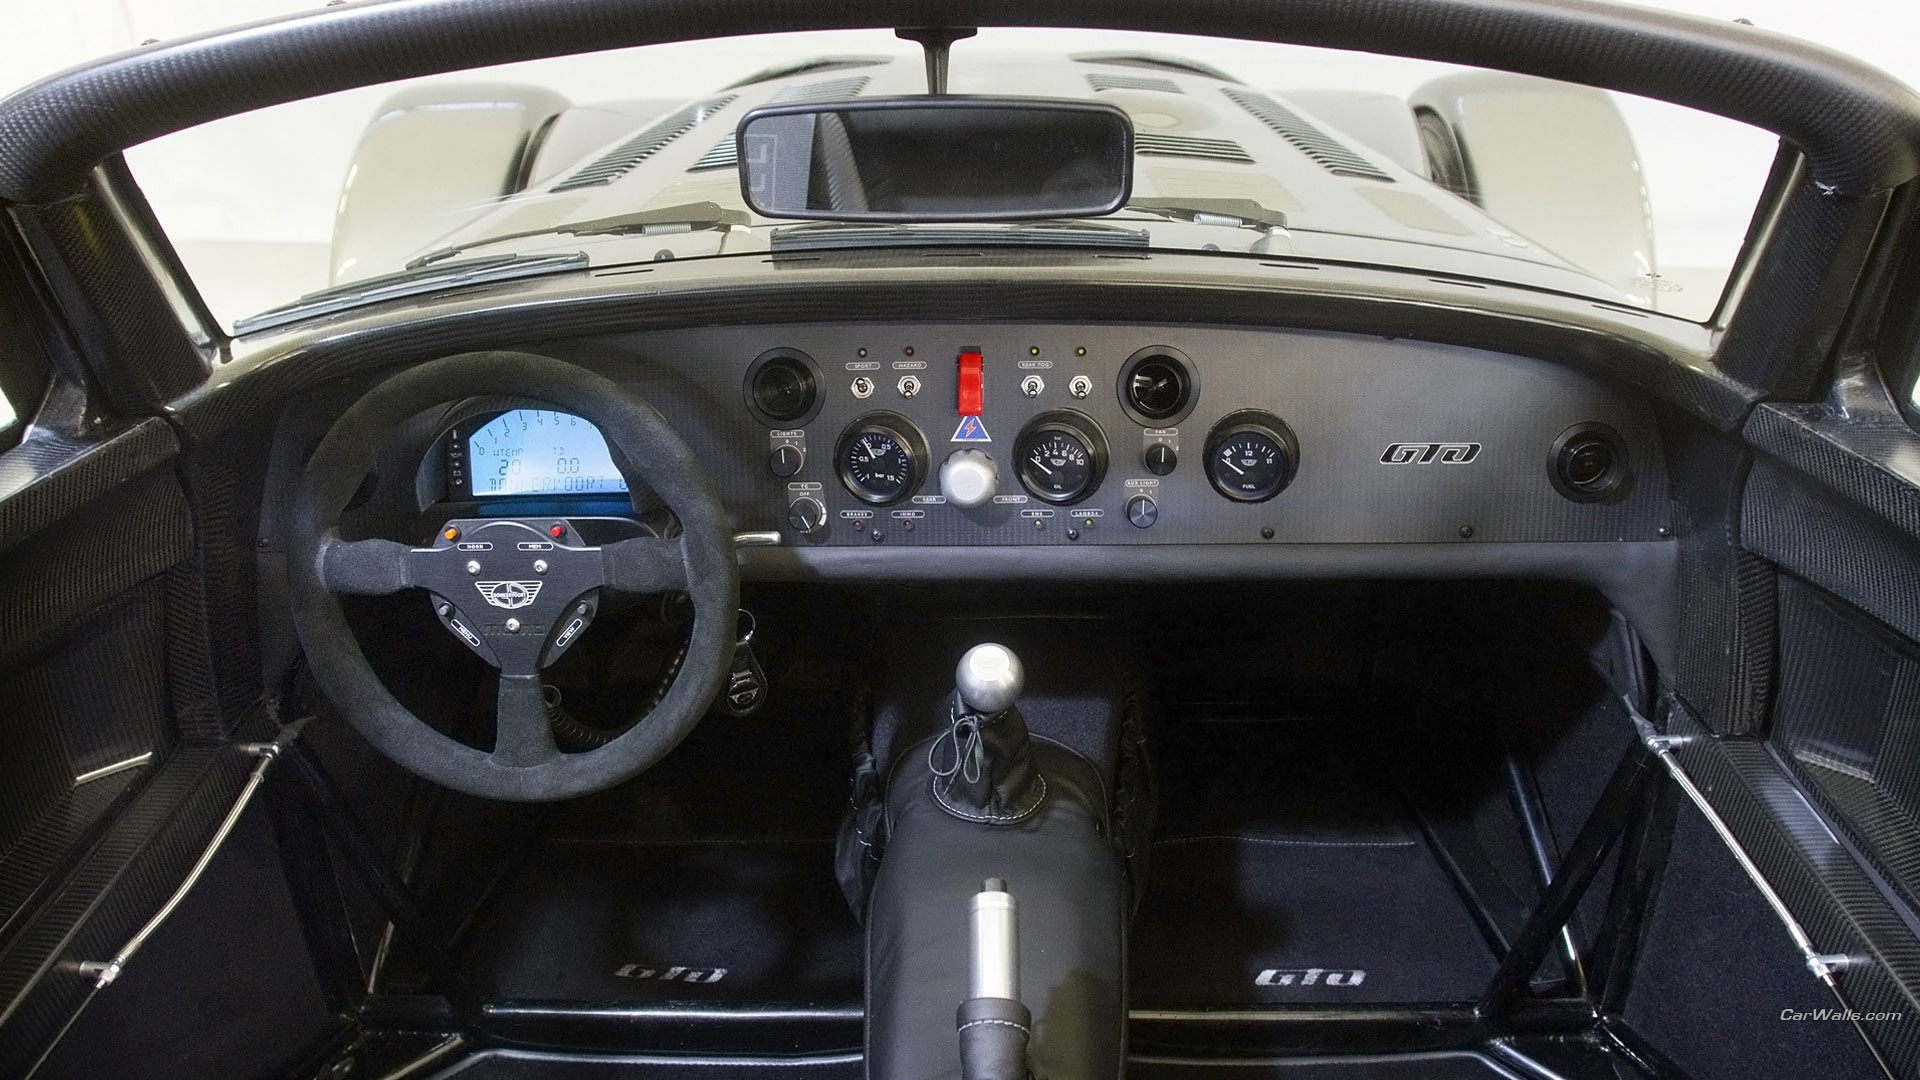 General 1920x1080 Donkervoort D8 GTO stick shift car interior car vehicle Dutch cars